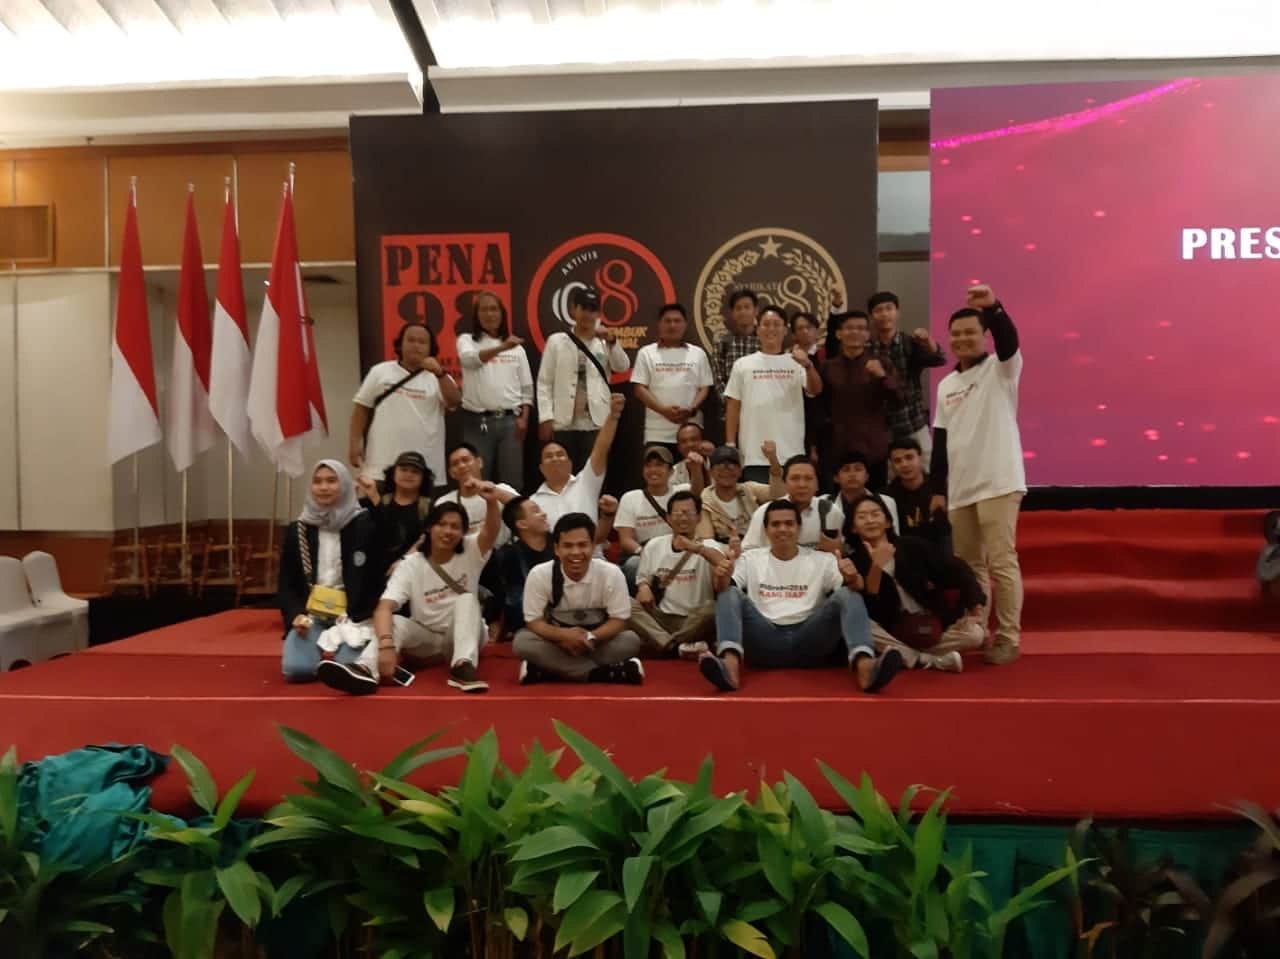 Sebut Walikota Tangerang Harus Bertanggung Jawab, Aktivis Akan Galang Coin Ambulance